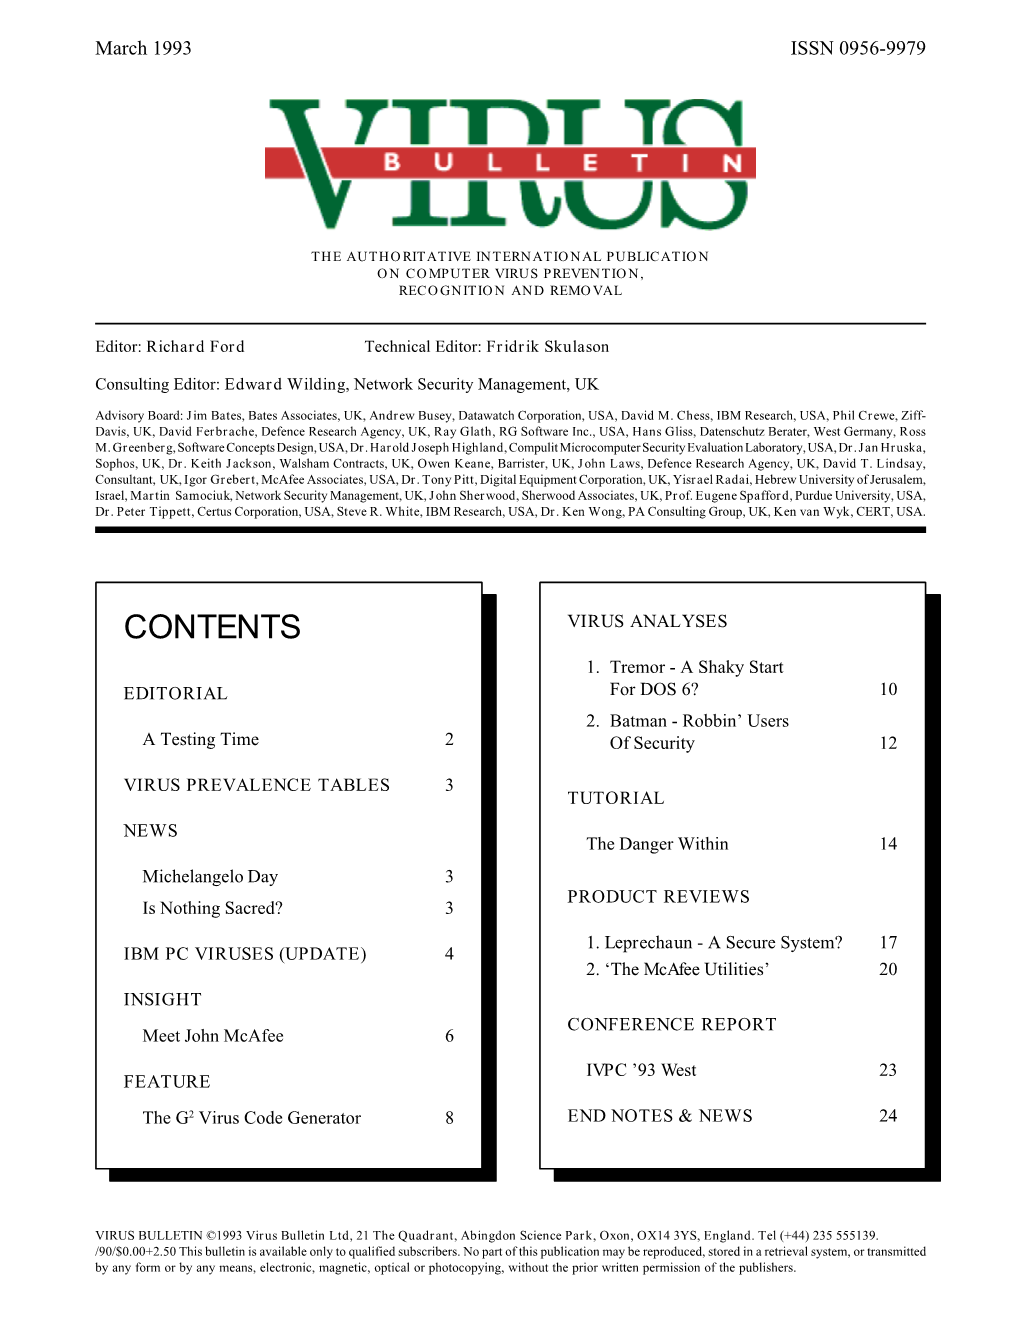 Virus Bulletin, March 1993